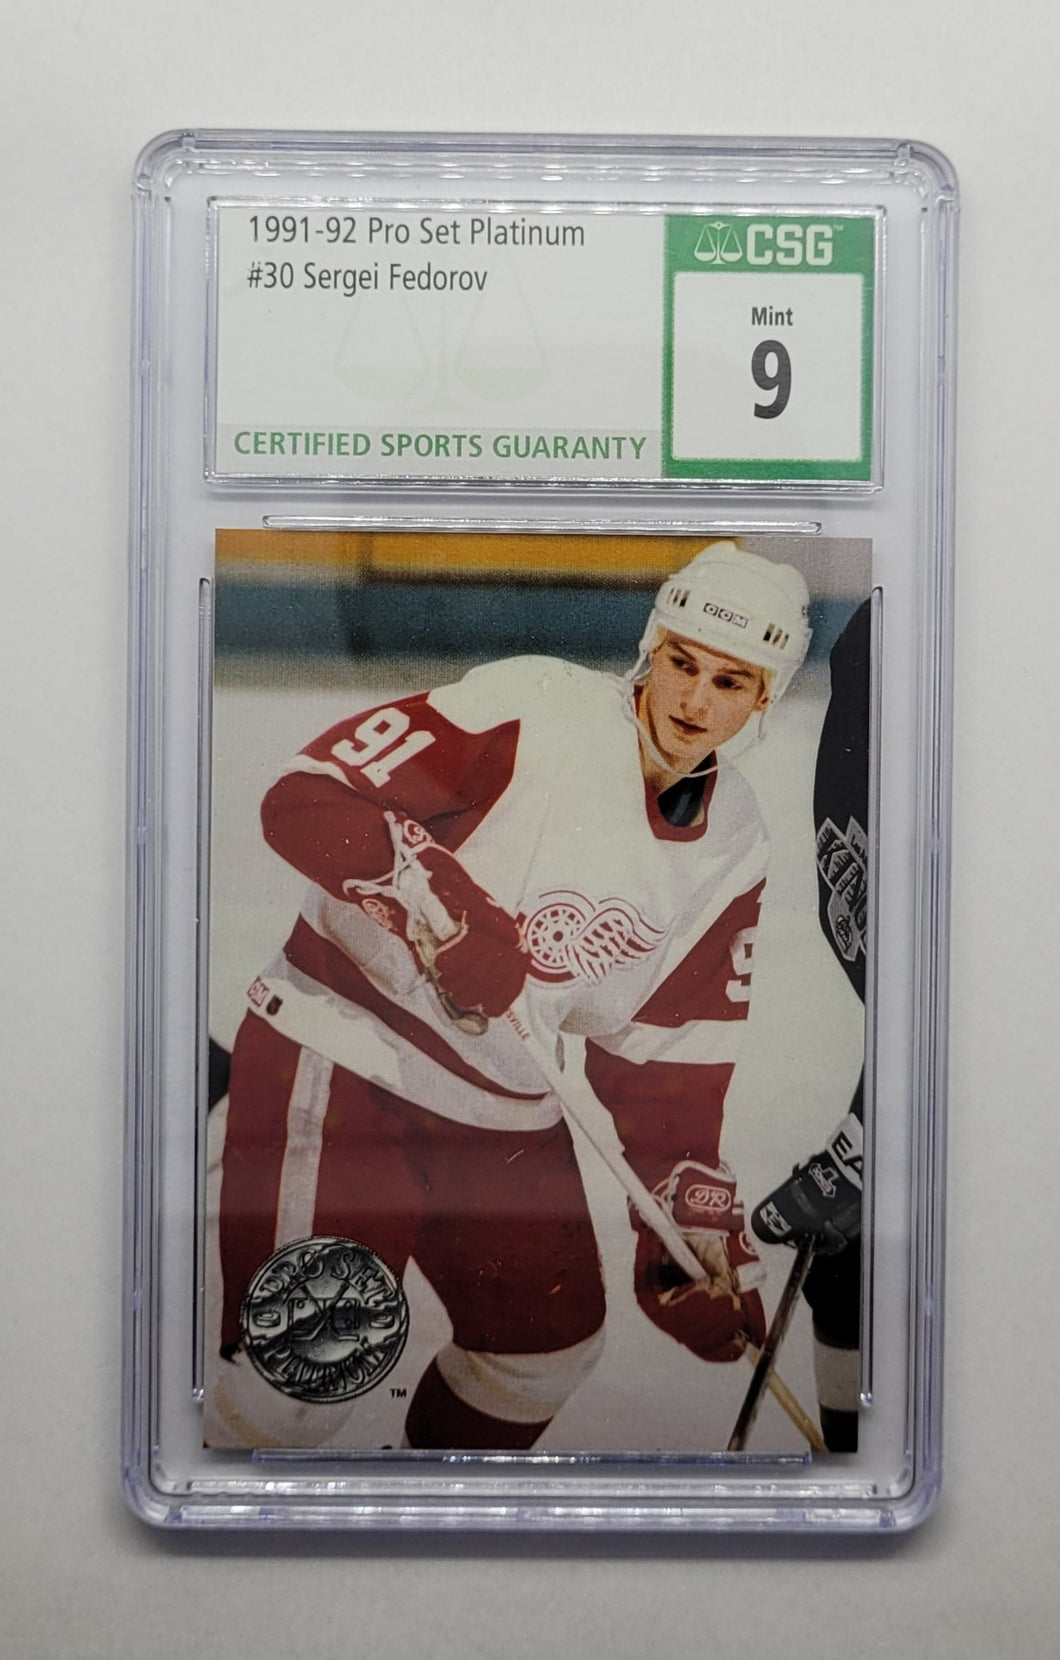 1991-92 Pro Set Platinum Sergei Fedorov Hockey Card CSG 9